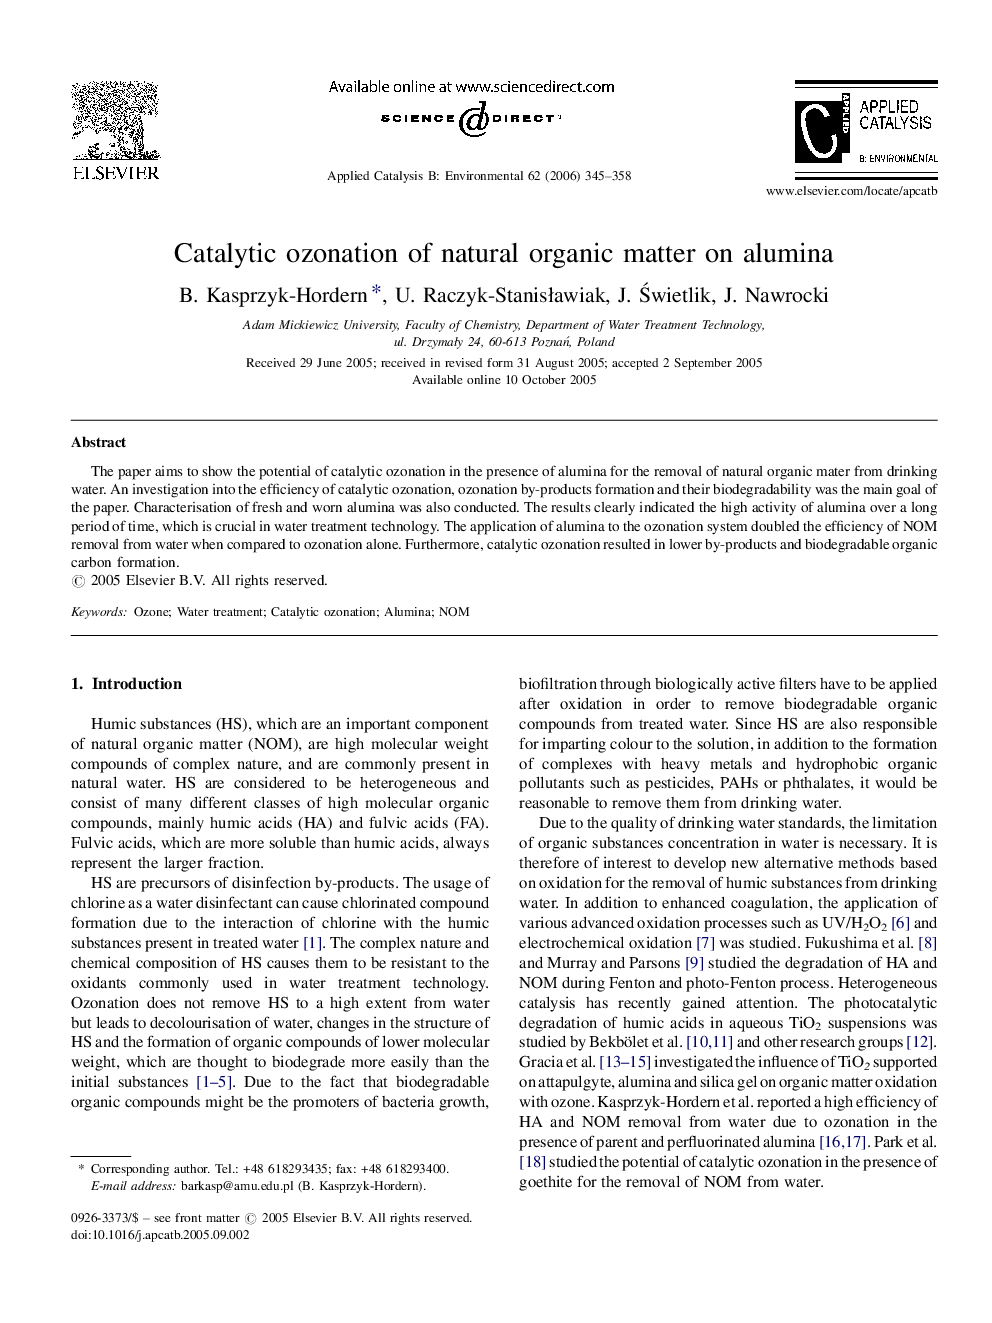 Catalytic ozonation of natural organic matter on alumina